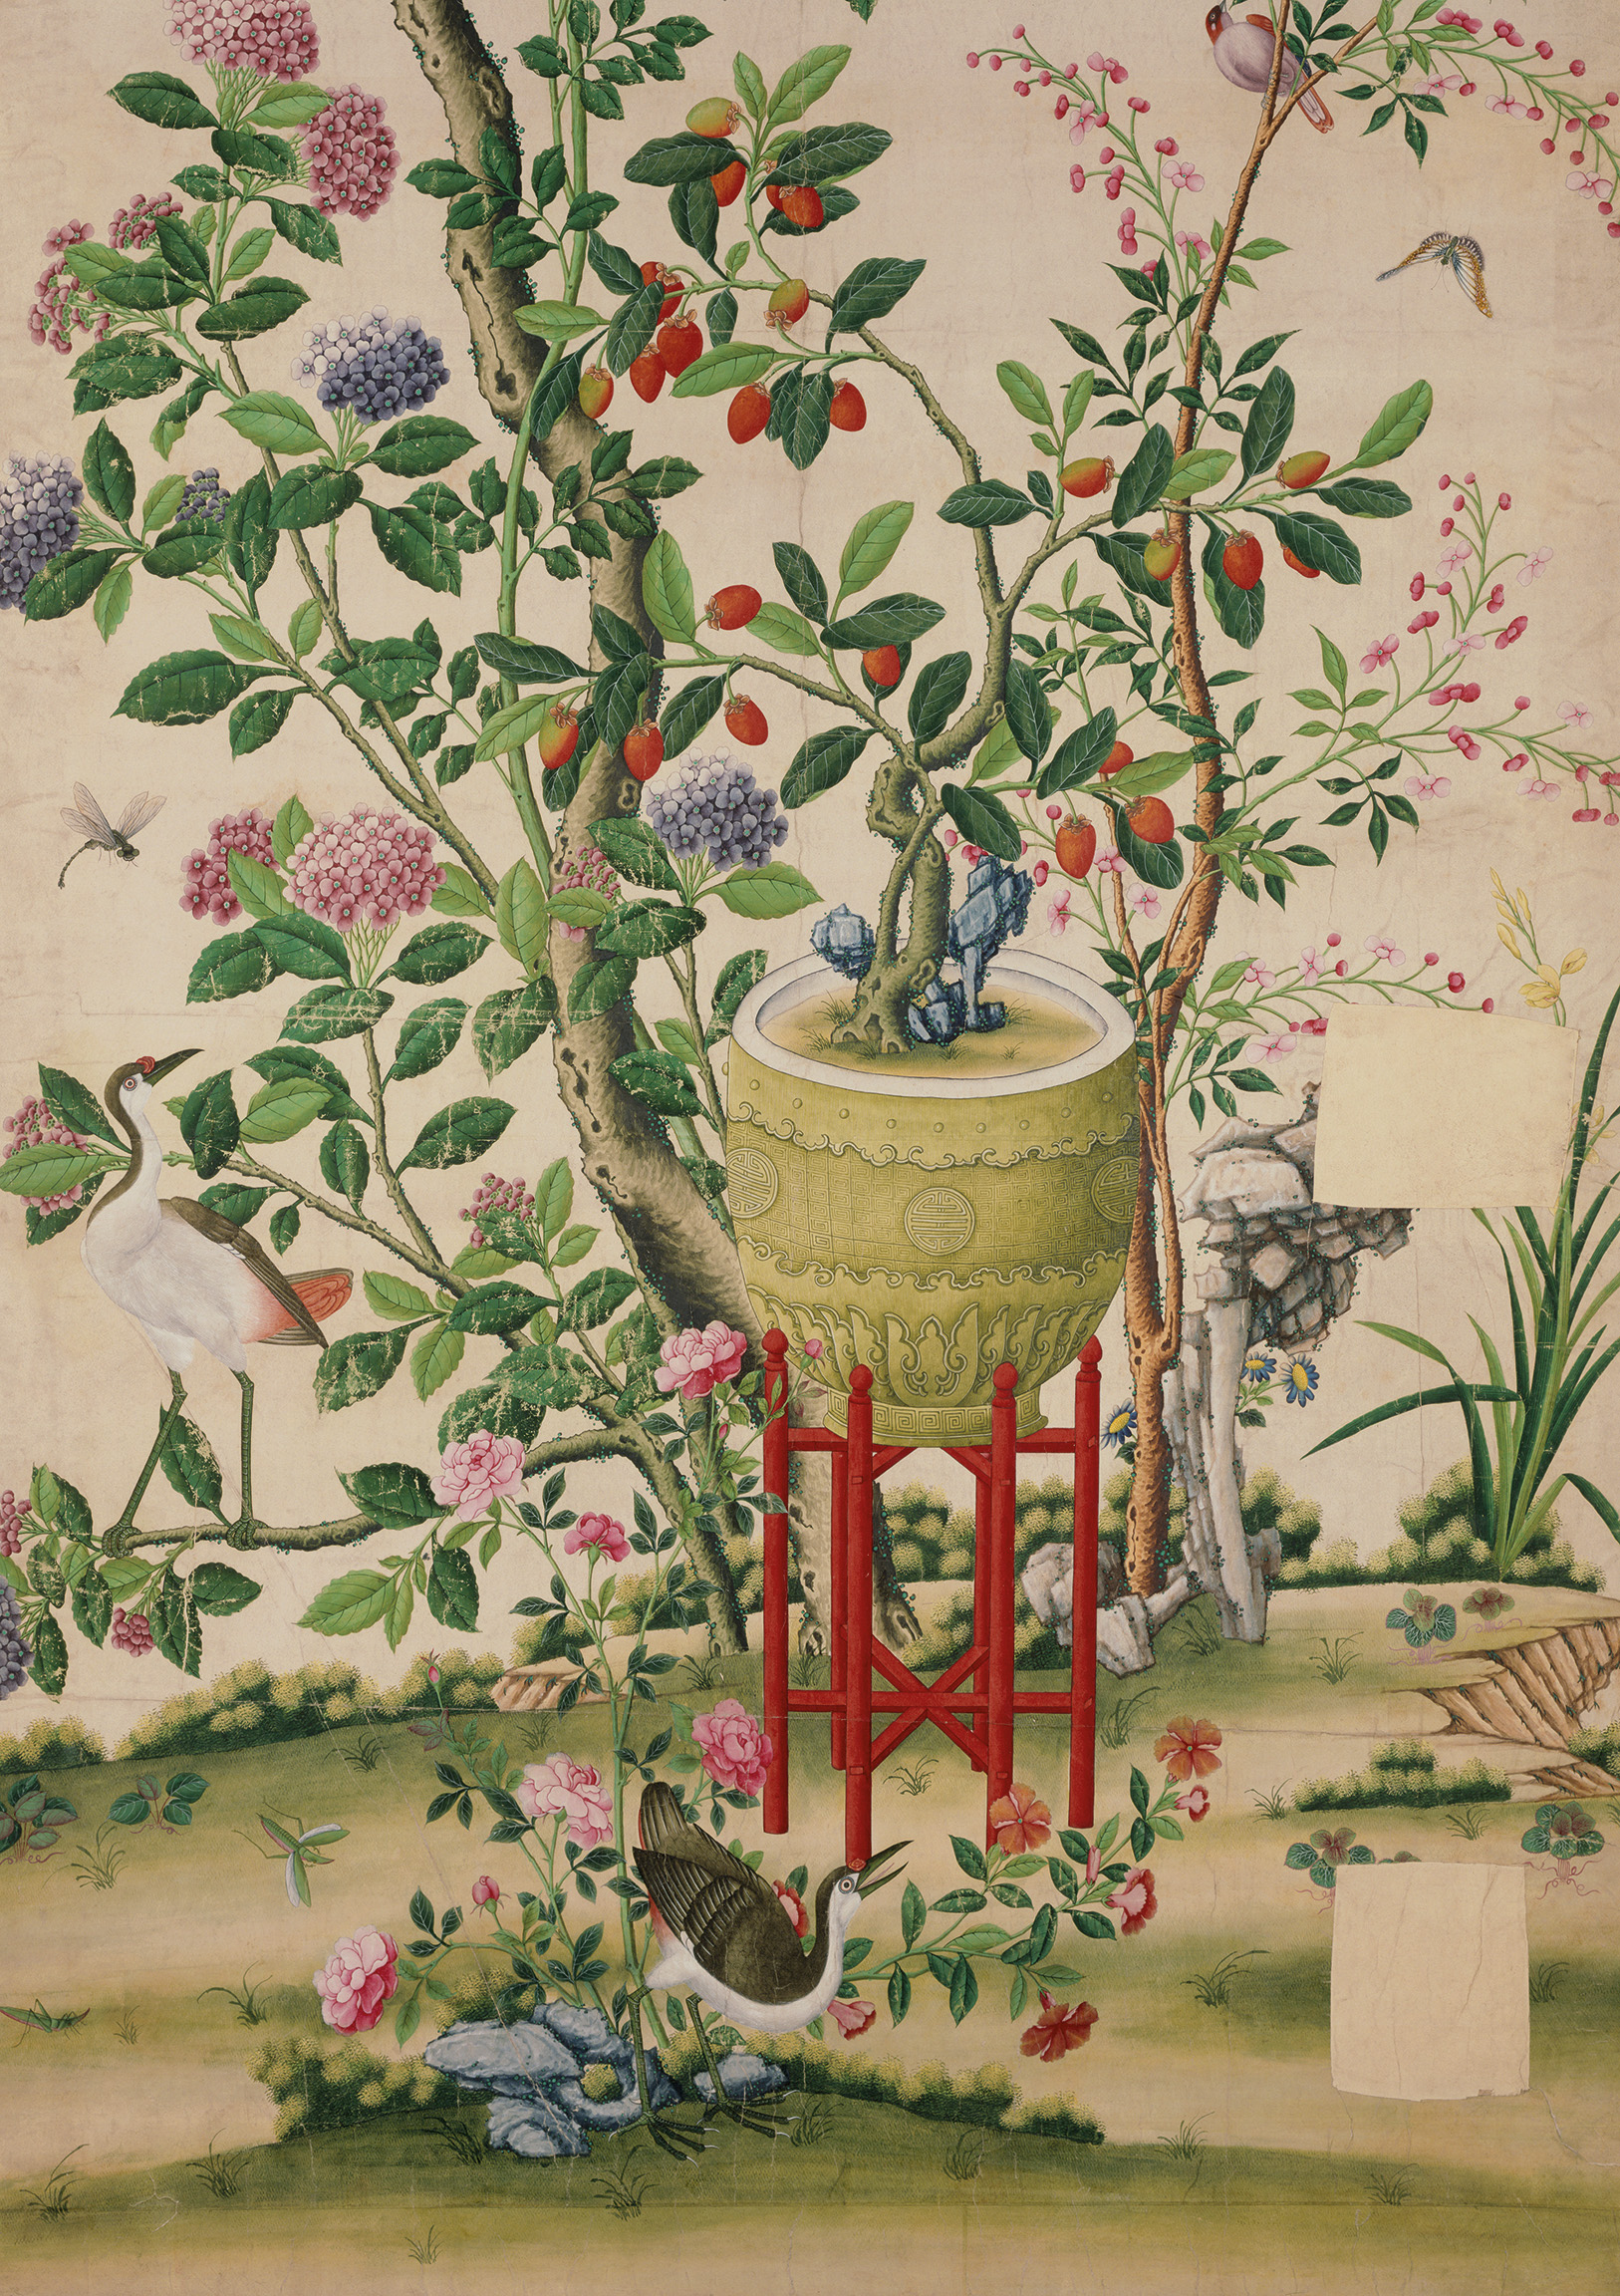 Flower vase on stool with flowering tree